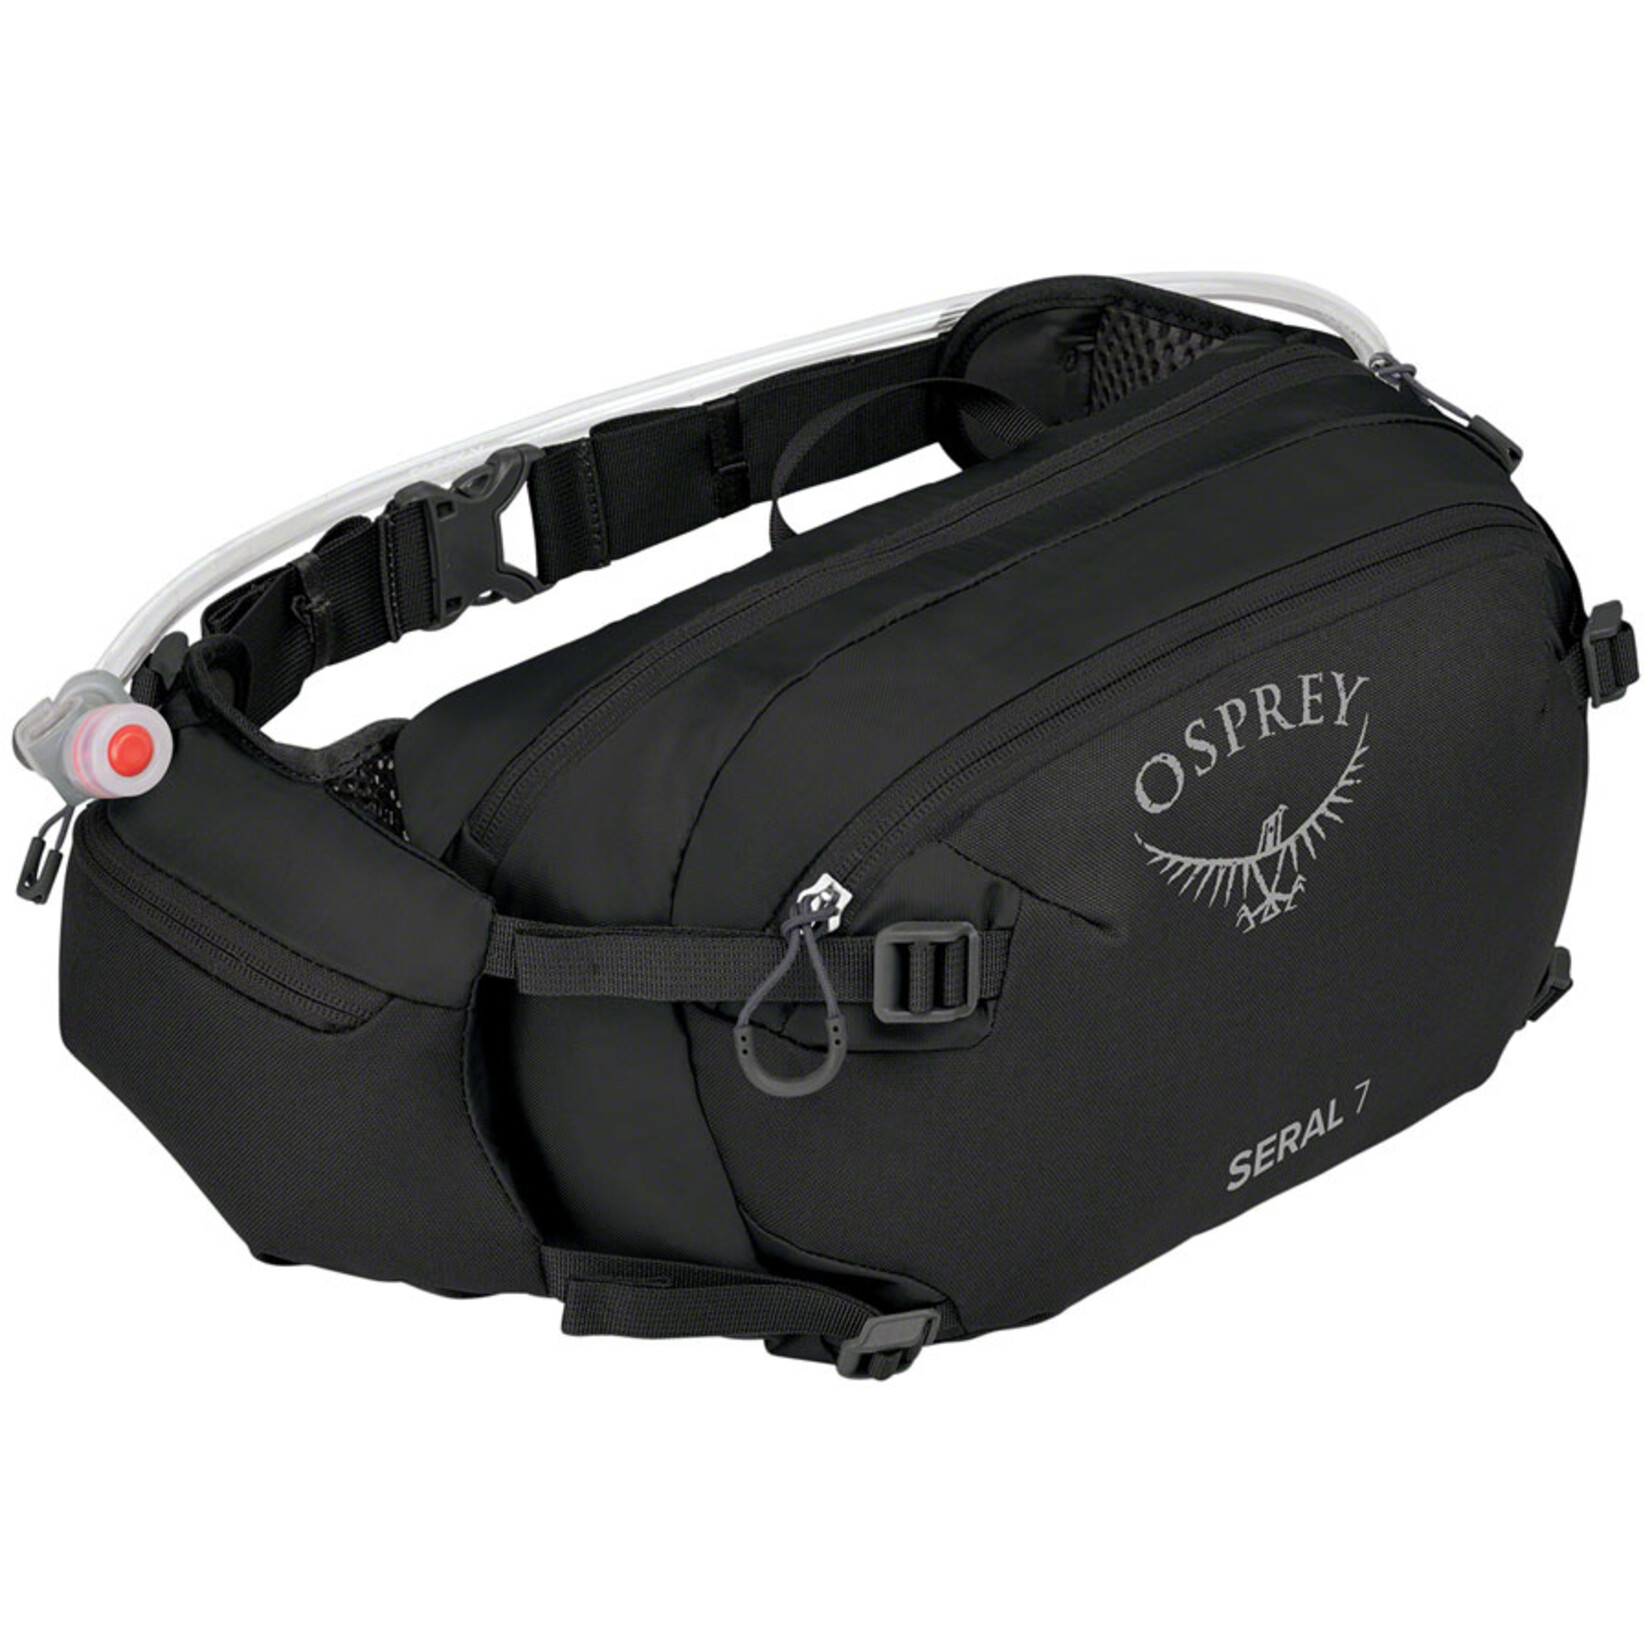 Osprey Osprey Seral 7 Lumbar Pack - One Size, Black